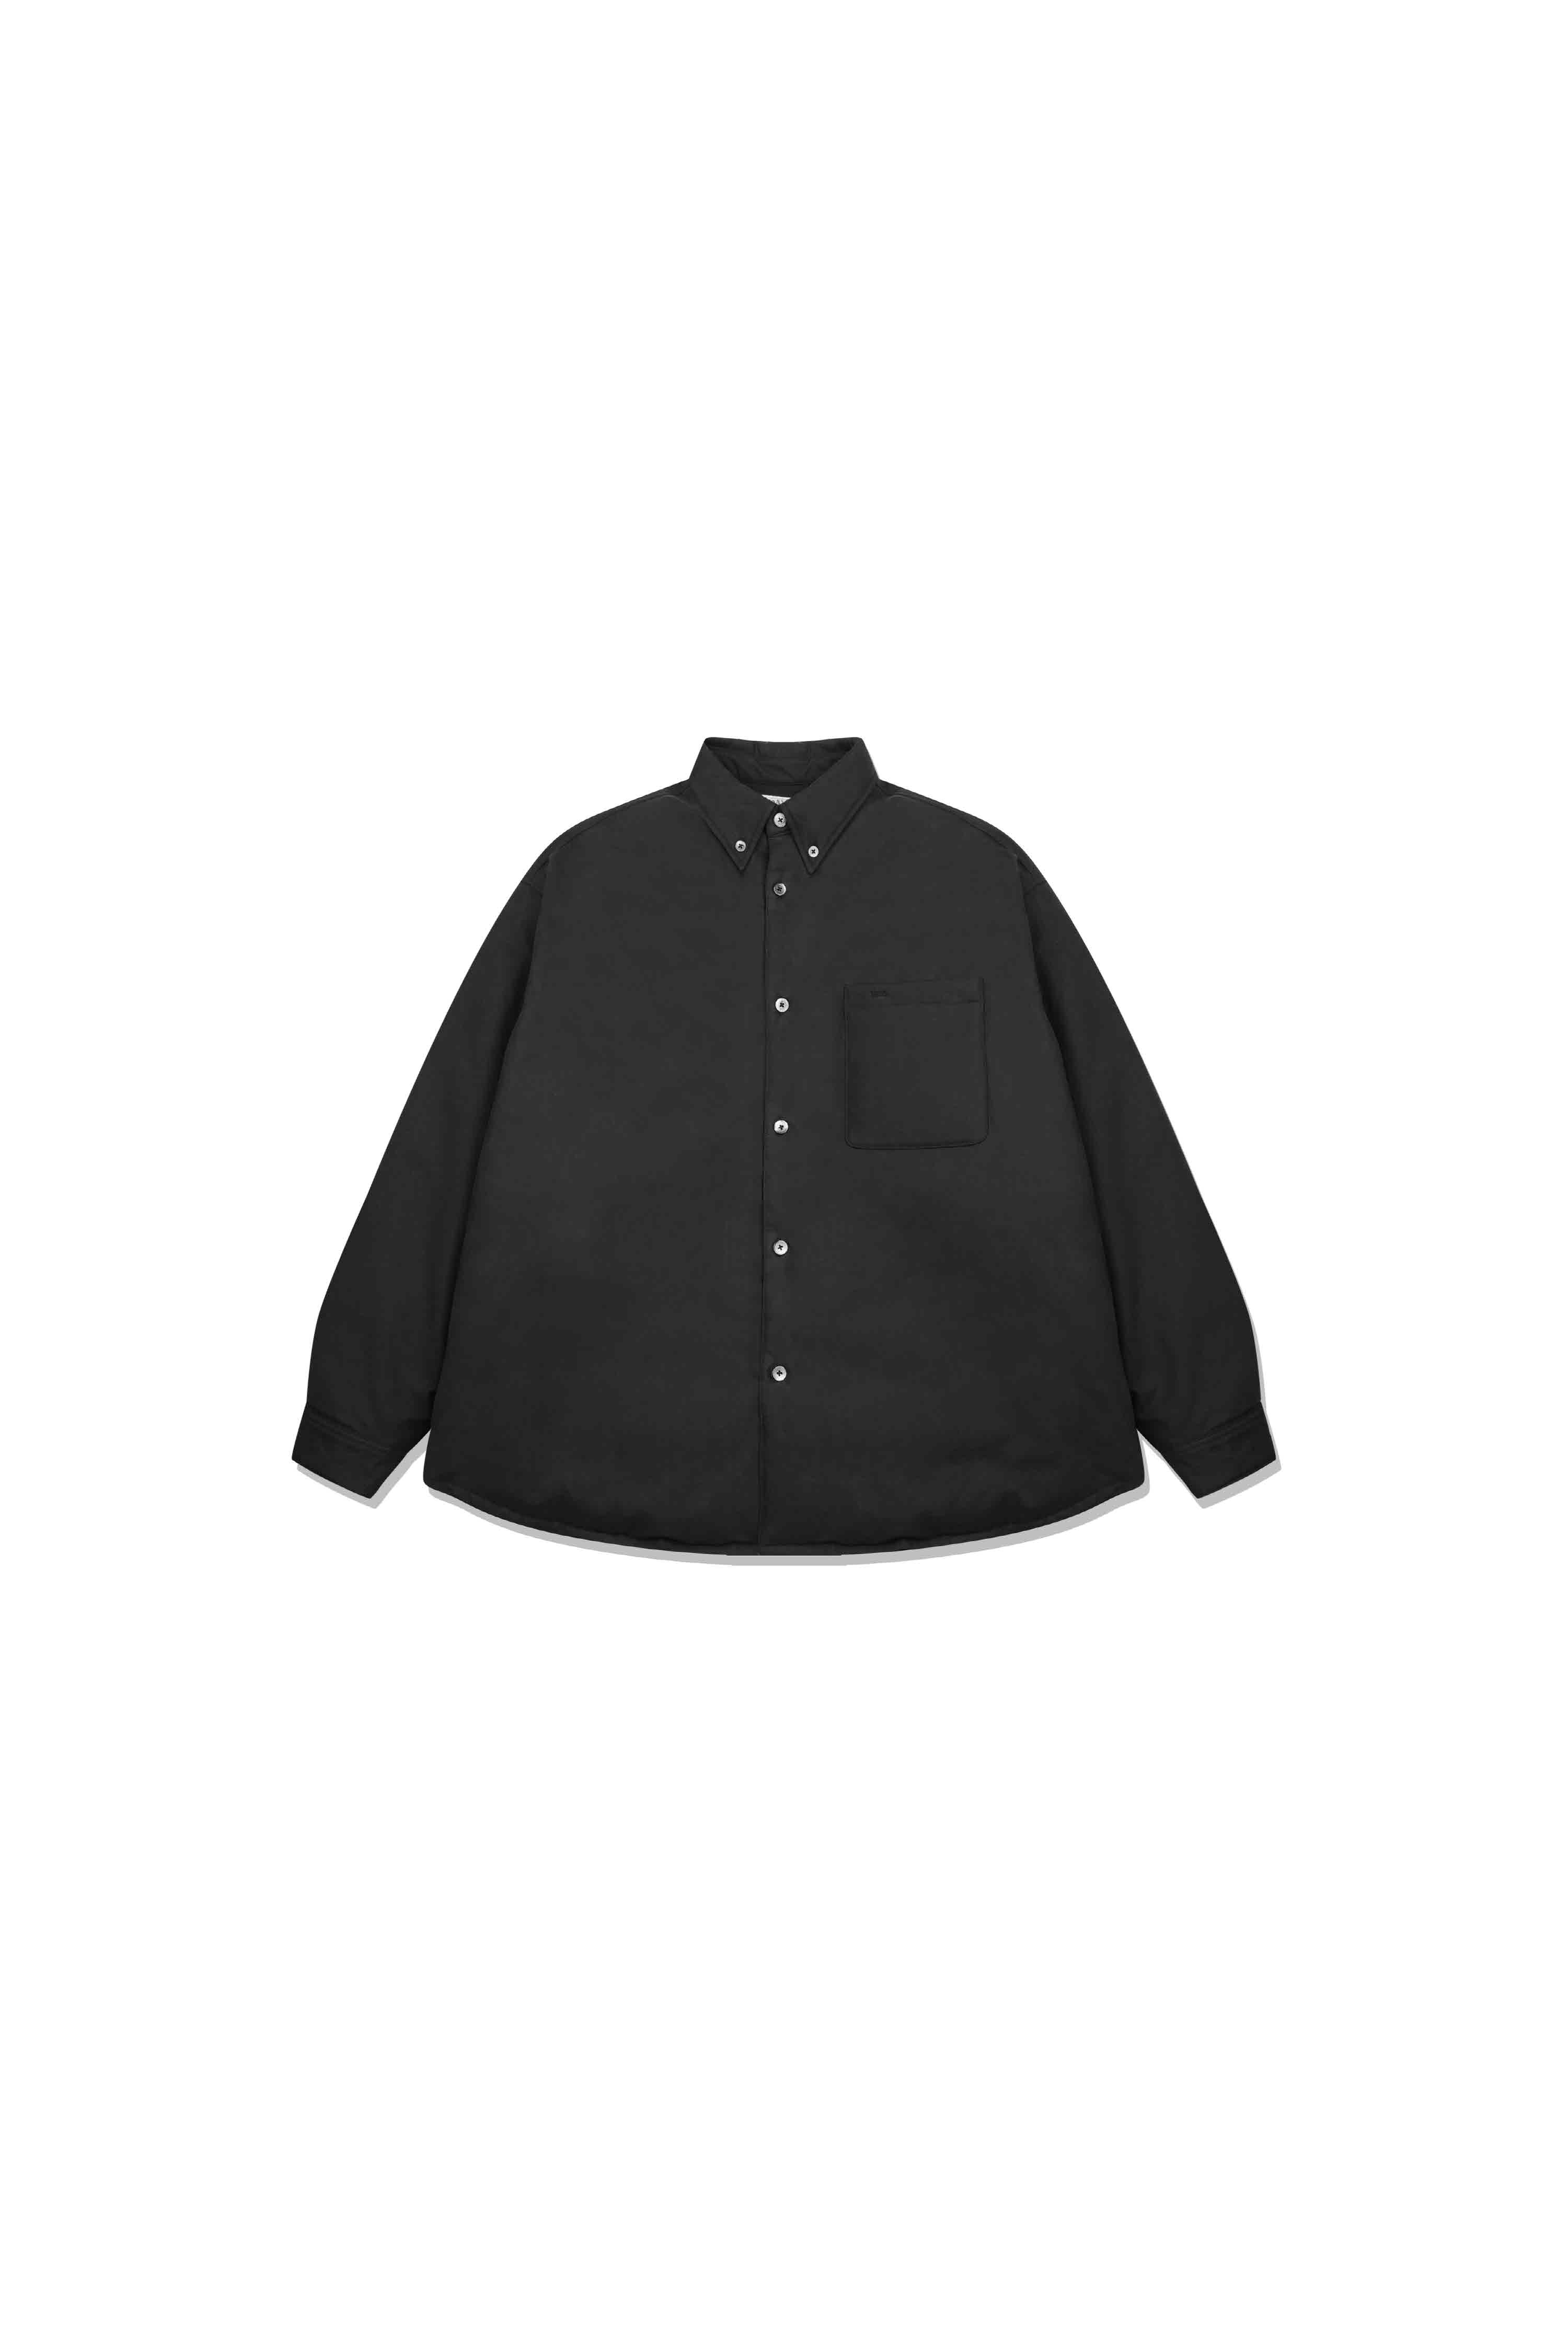 Goose Down Shirts Jacket Black (12월 6일 순차 발송)